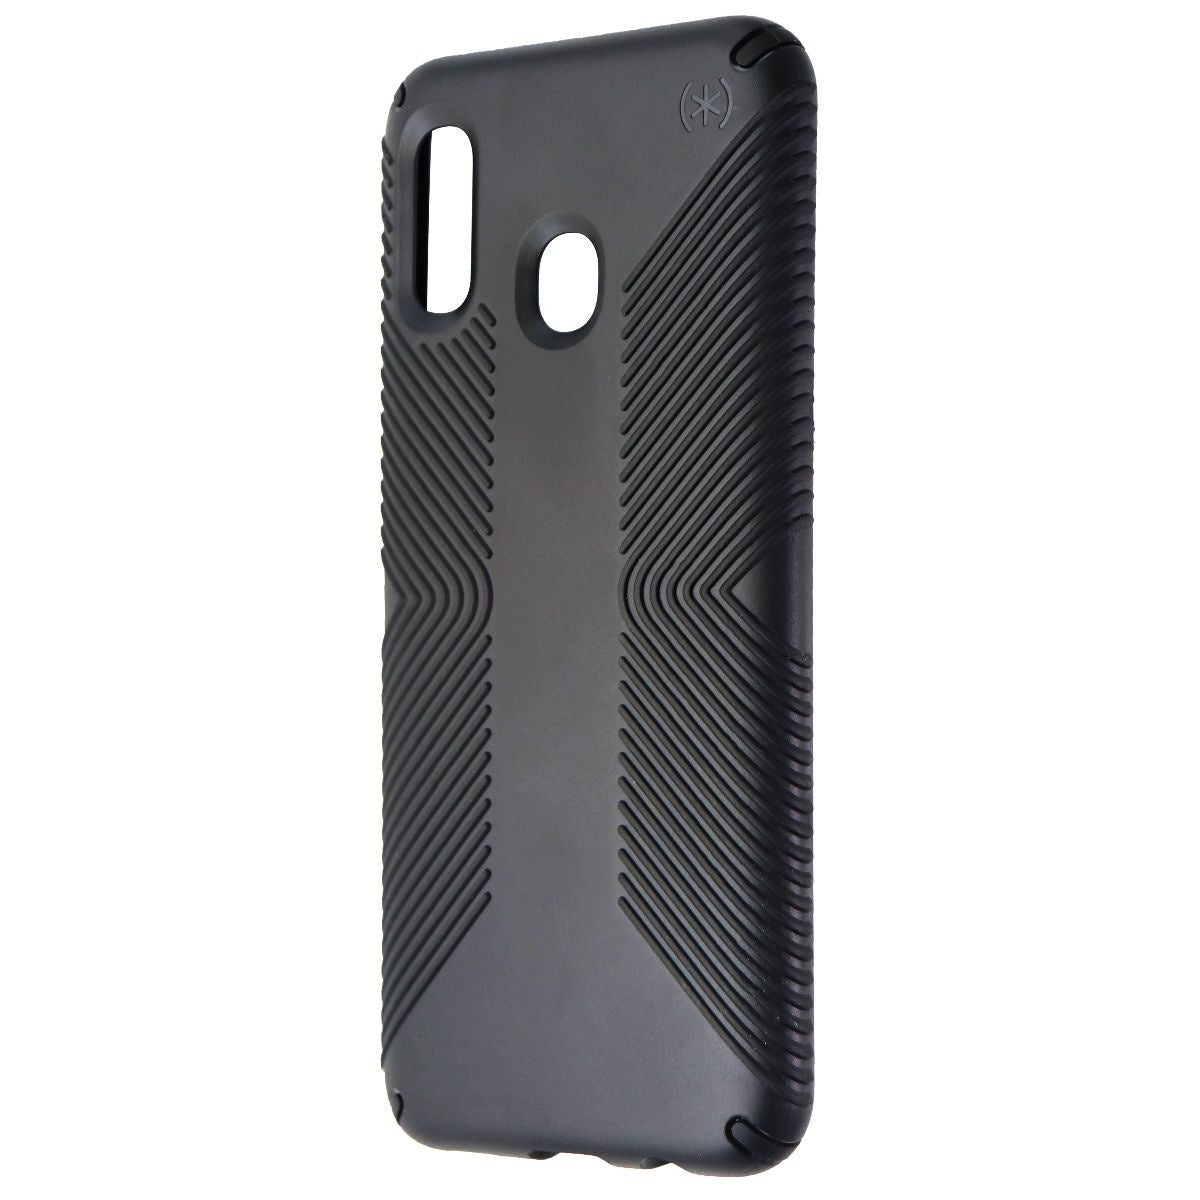 Speck Presidio Grip Series Hard Case for the Samsung Galaxy A20 - Black